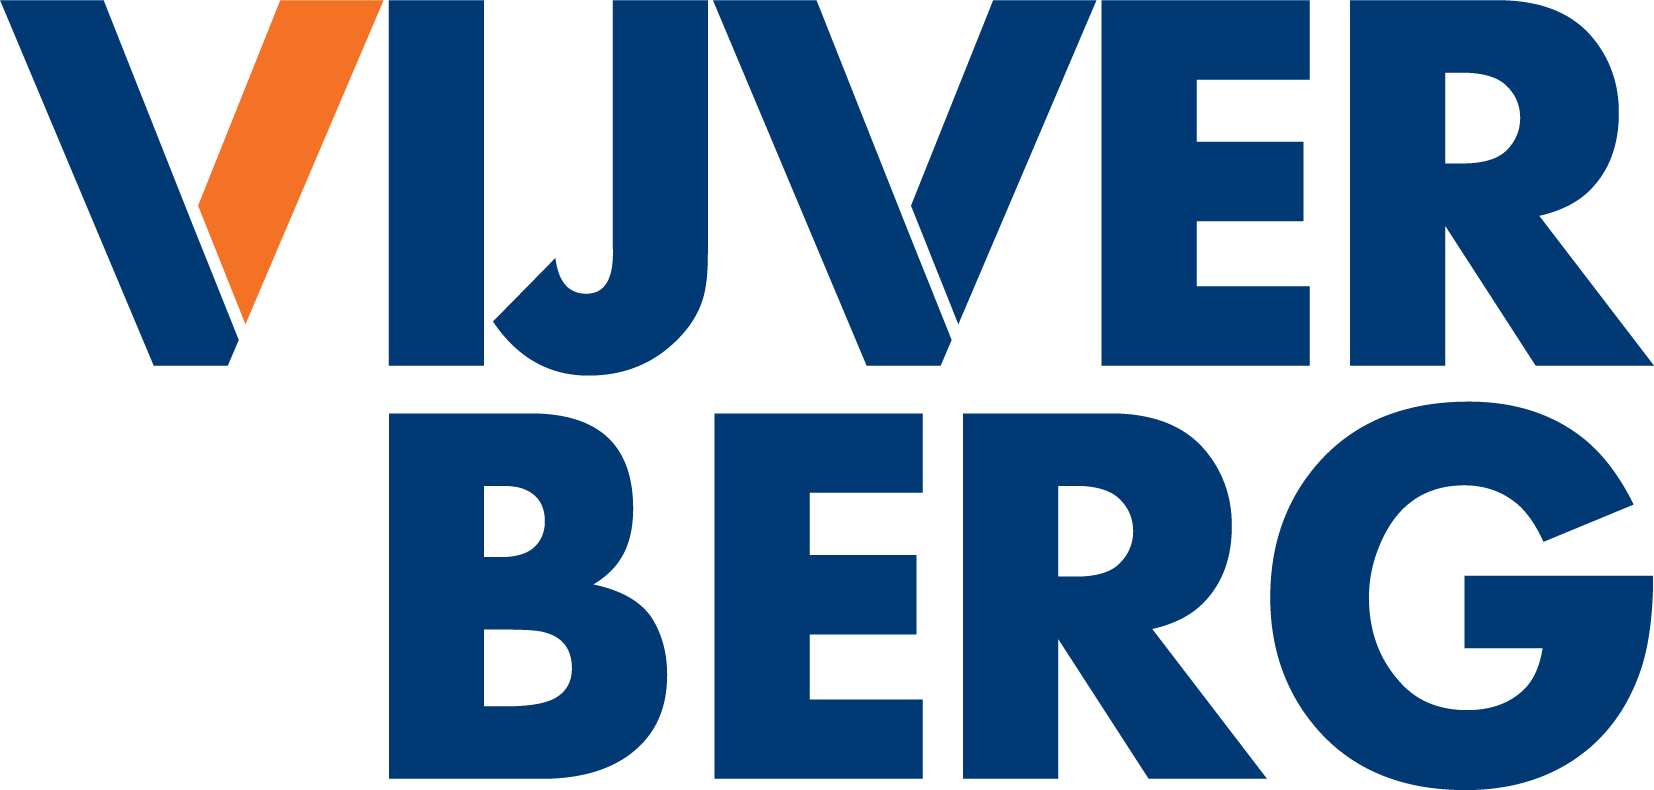 Logo Vijverberg